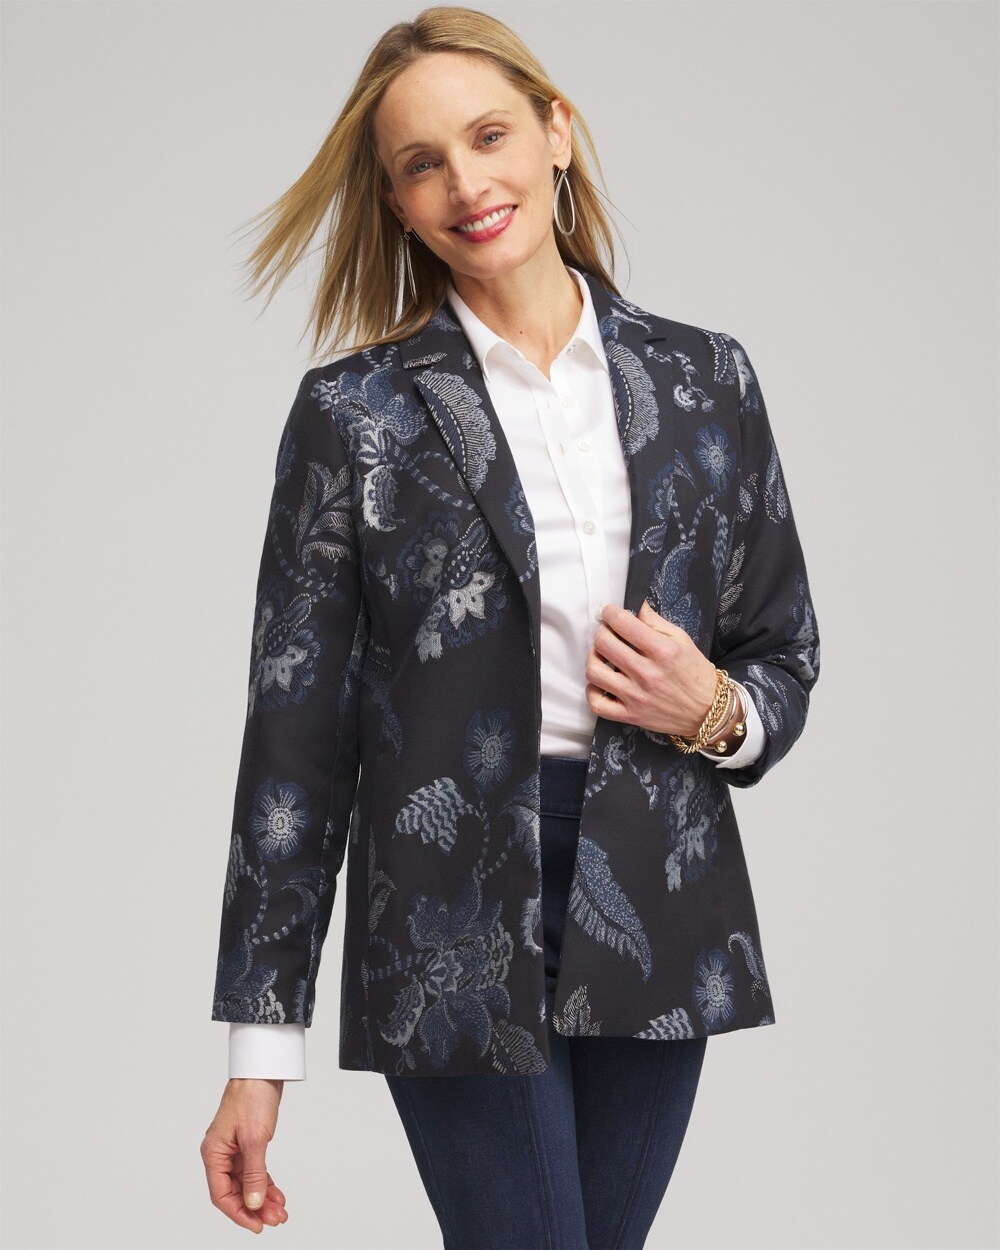 Limited Edition Luxury Jacquard Print Windbreaker Coat jacket dress -  Nightingale & Rose